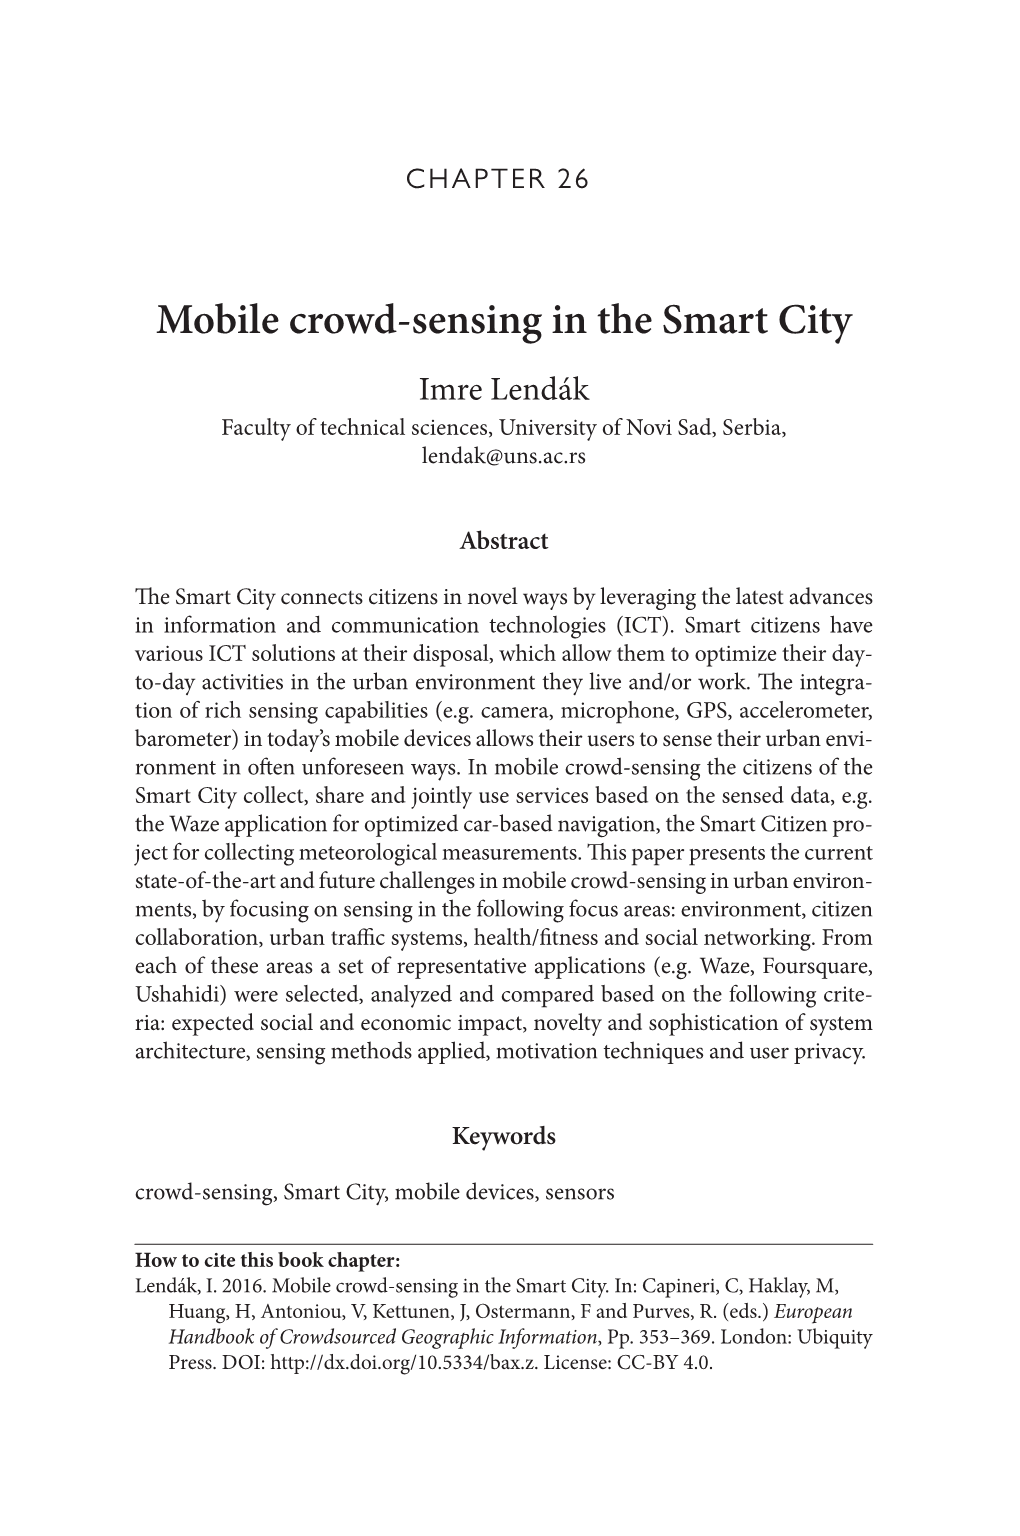 Mobile Crowd-Sensing in the Smart City Imre Lendák Faculty of Technical Sciences, University of Novi Sad, Serbia, Lendak@Uns.Ac.Rs